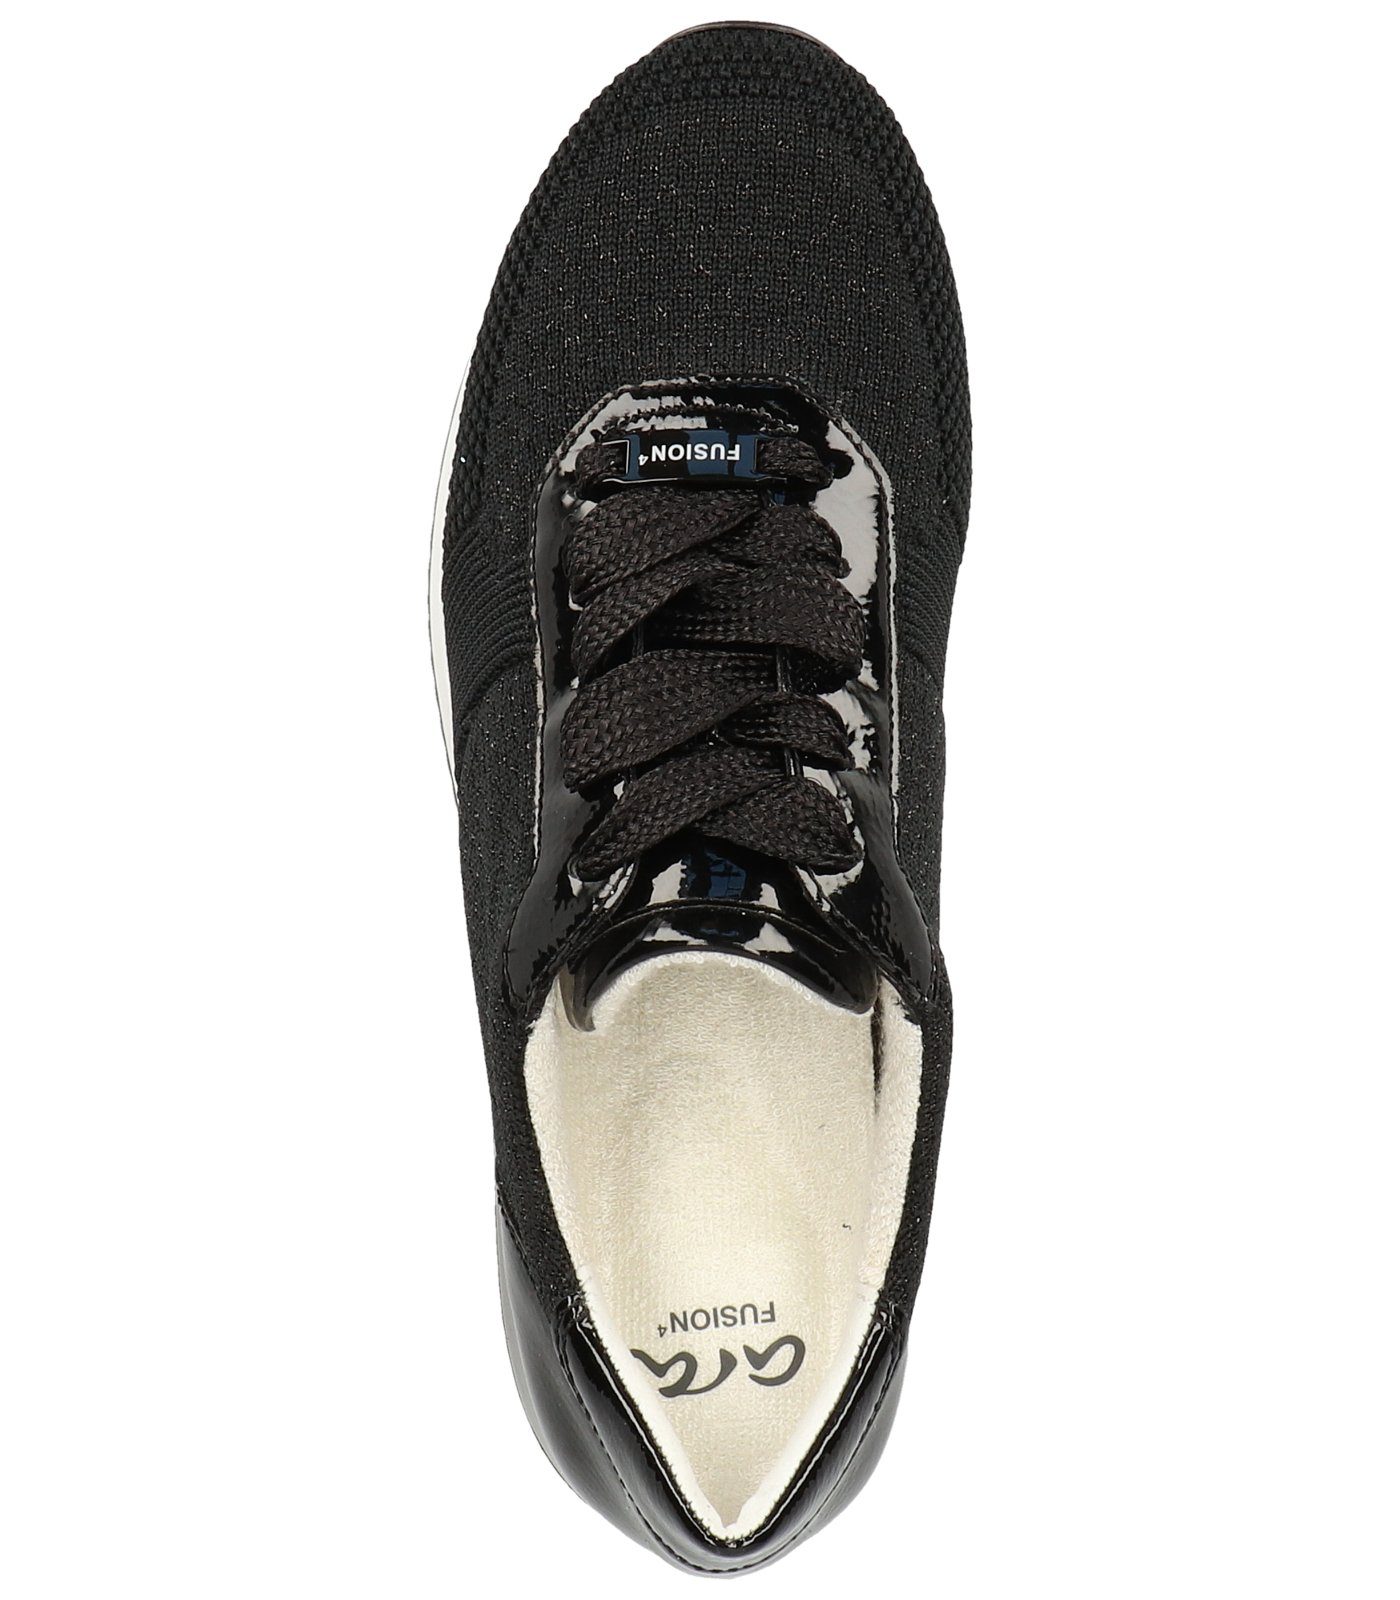 Ara schwarz Synthetik/Textil Sneaker Sneaker 042120